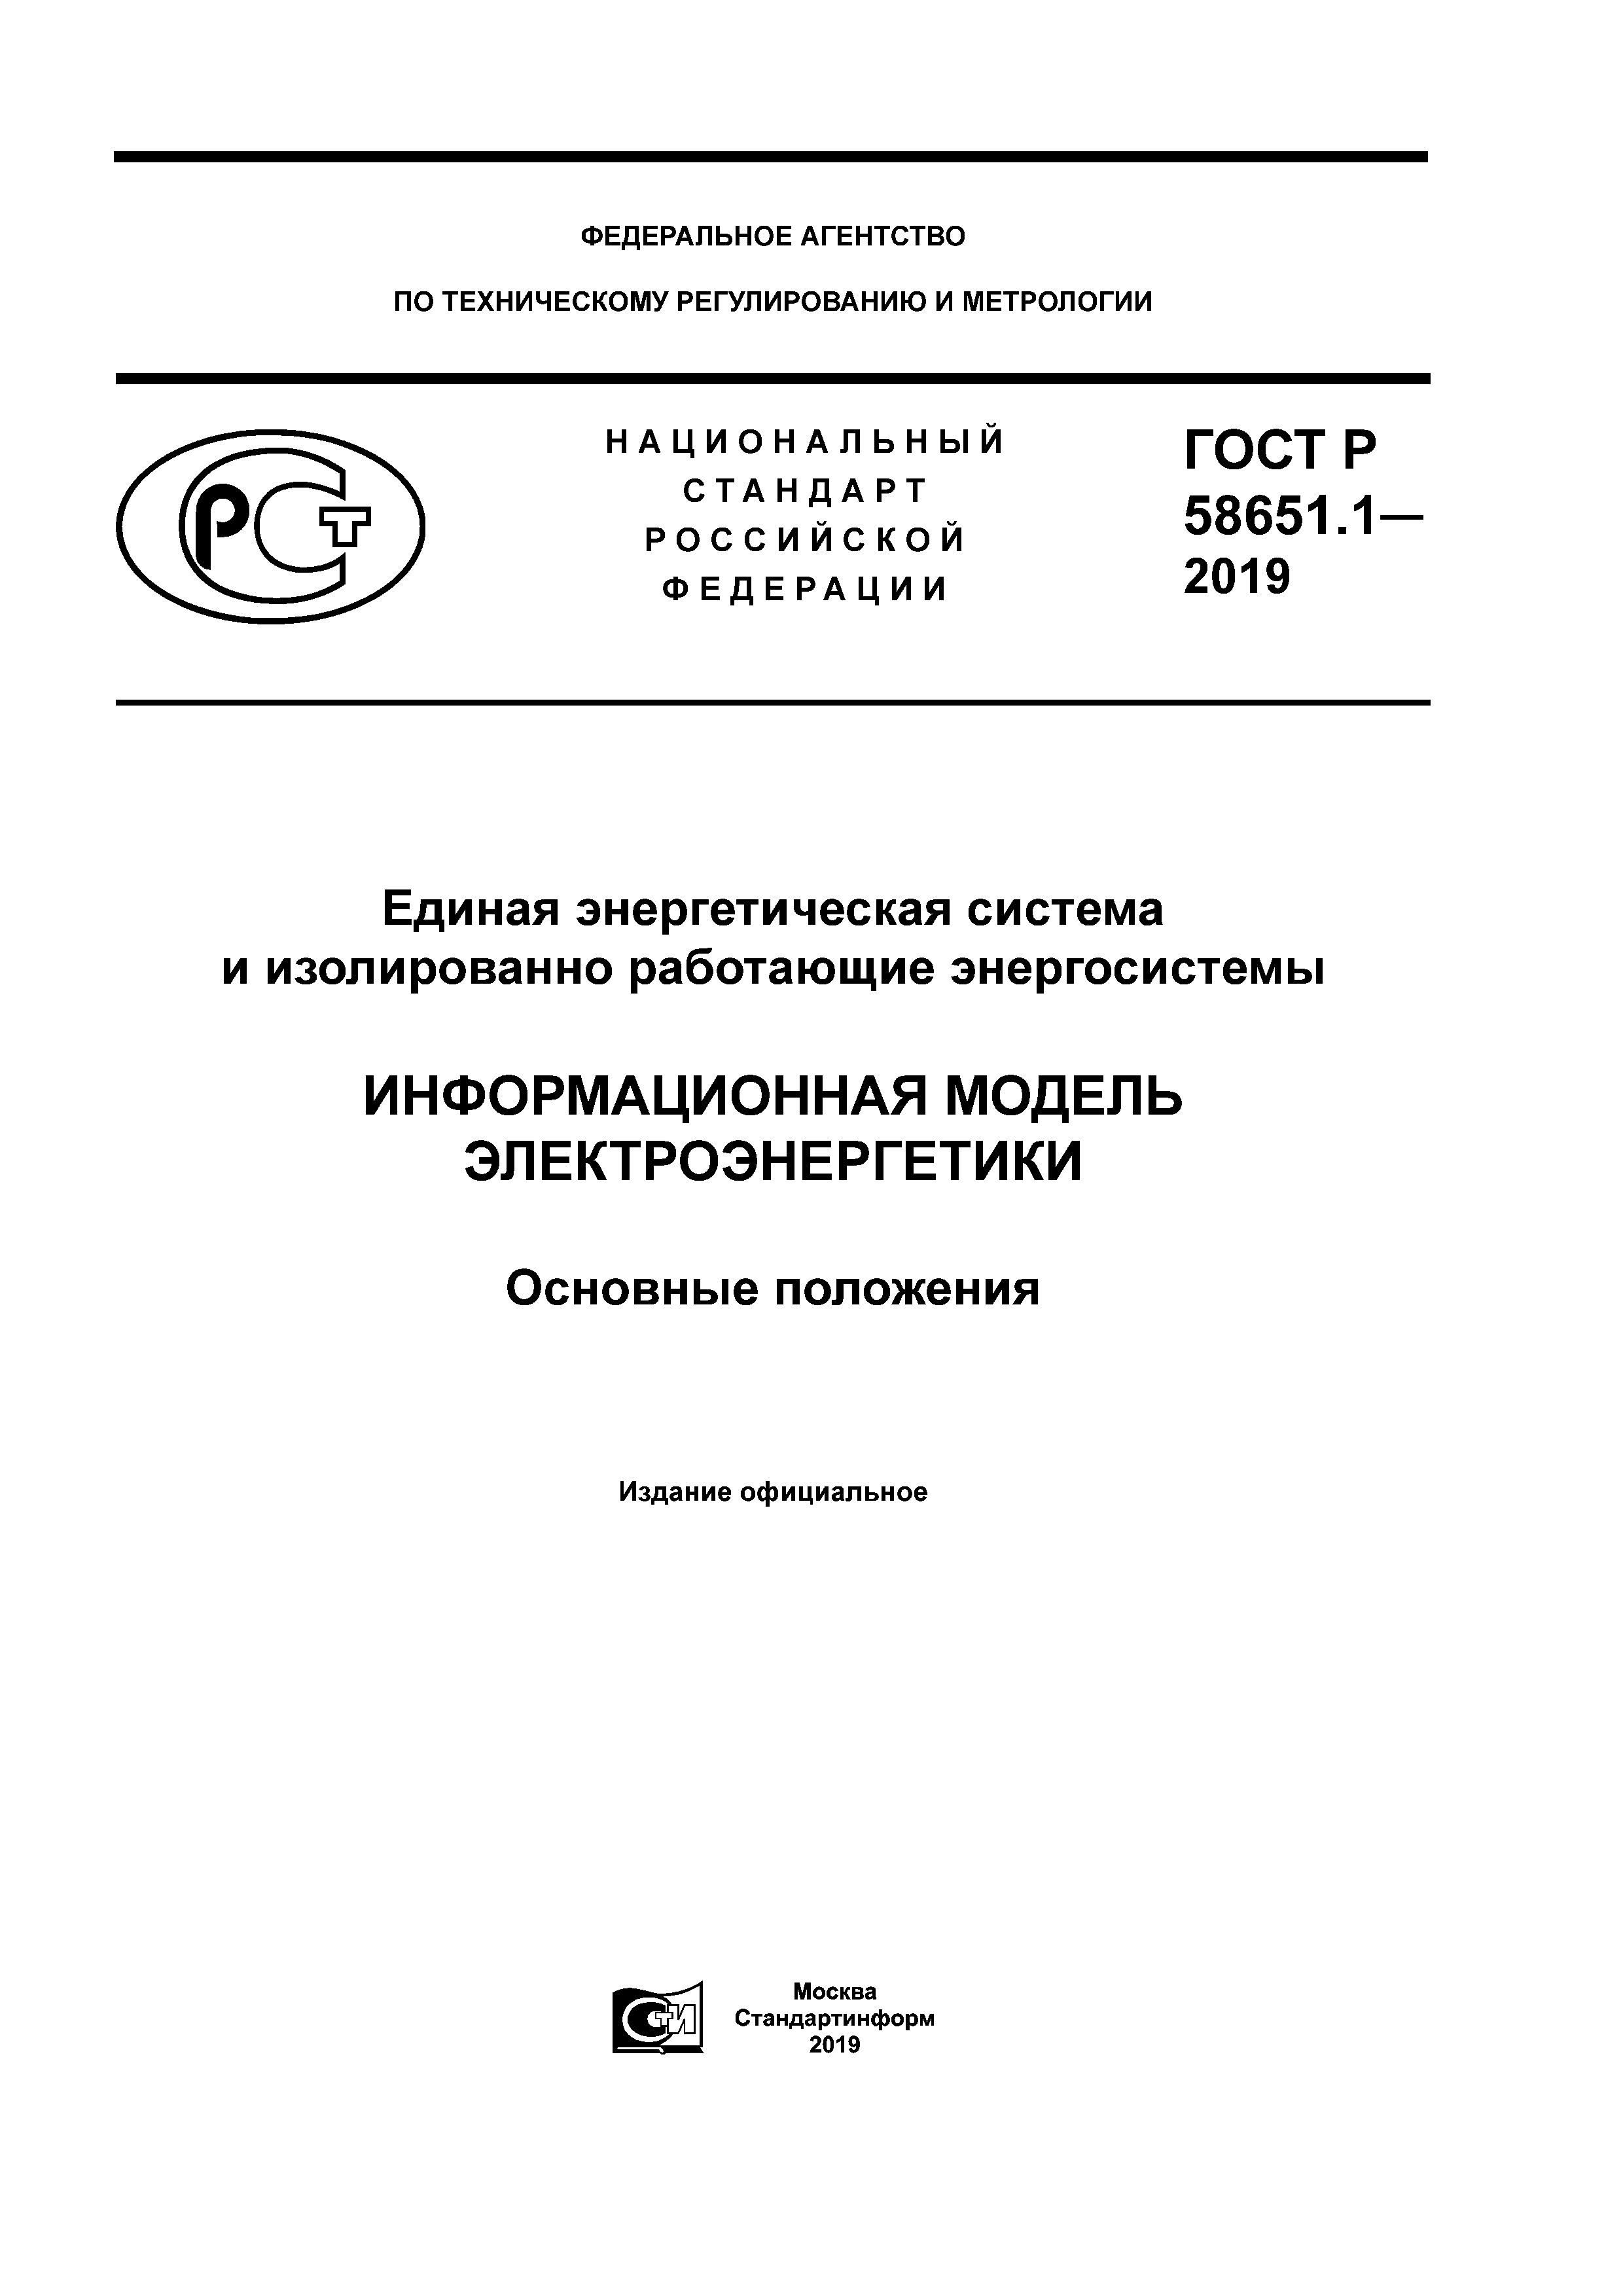 ГОСТ Р 58651.1-2019